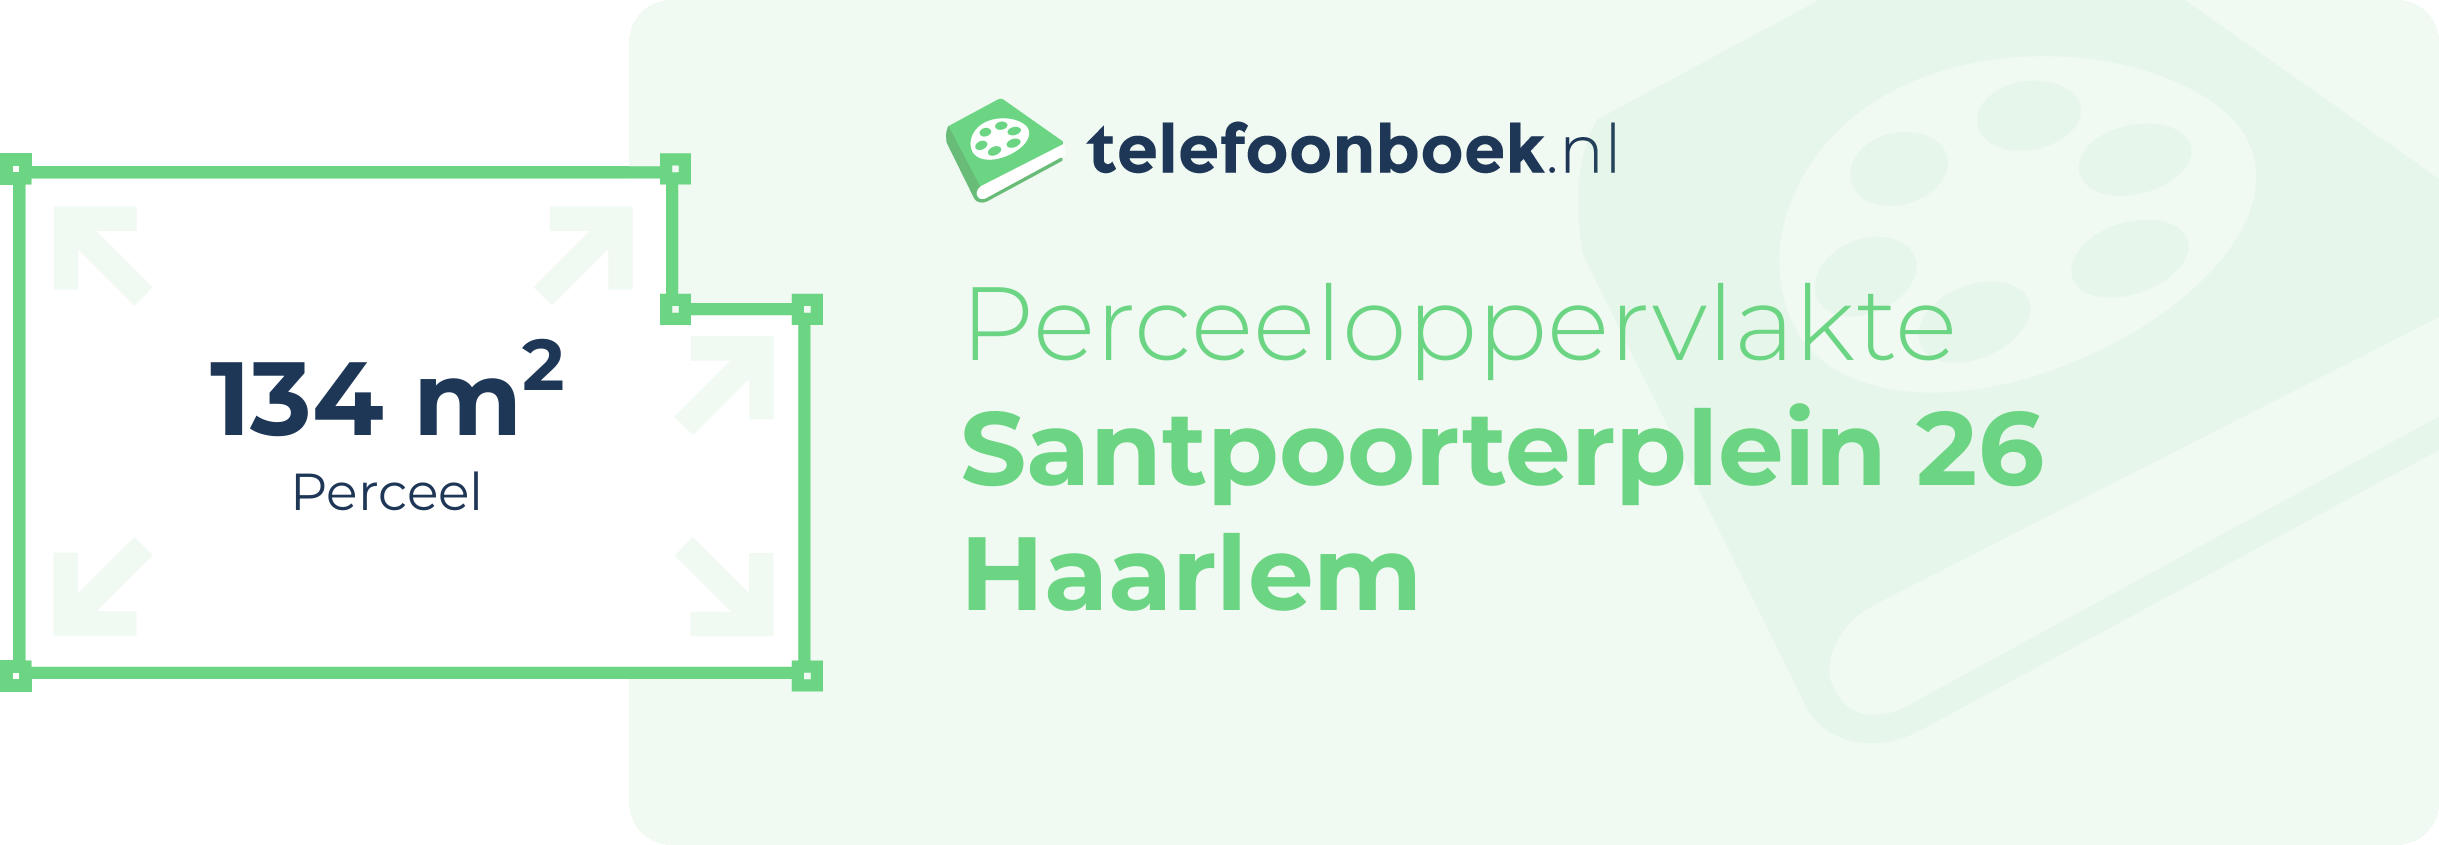 Perceeloppervlakte Santpoorterplein 26 Haarlem